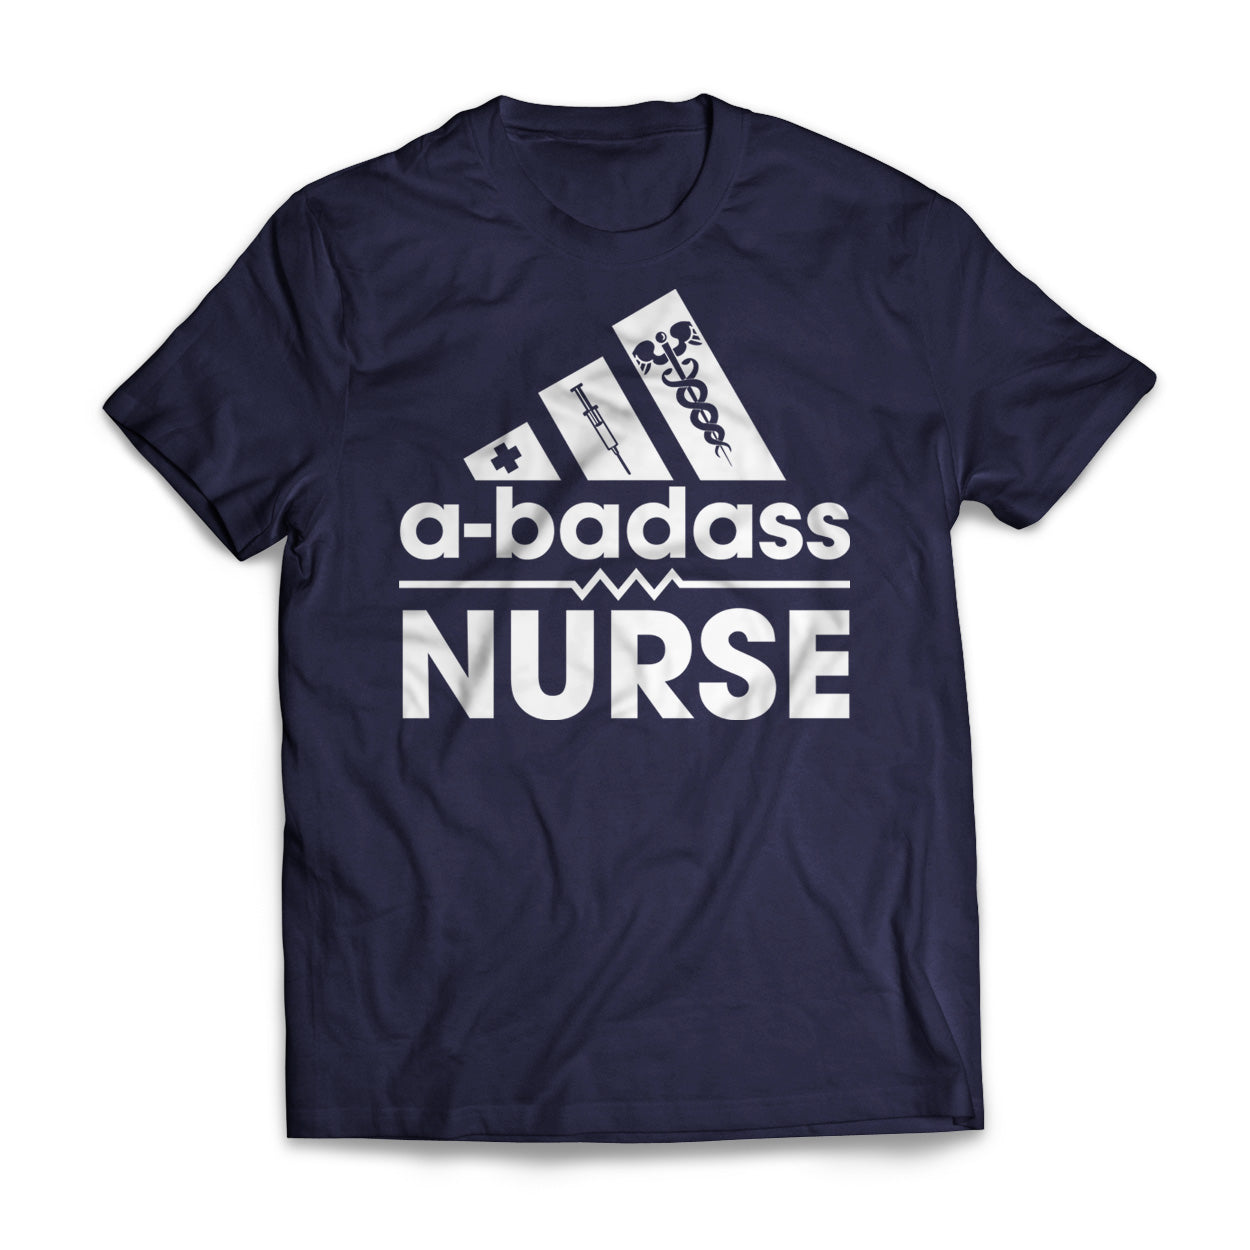 A-Badass Nurse Short Sleeve Tee